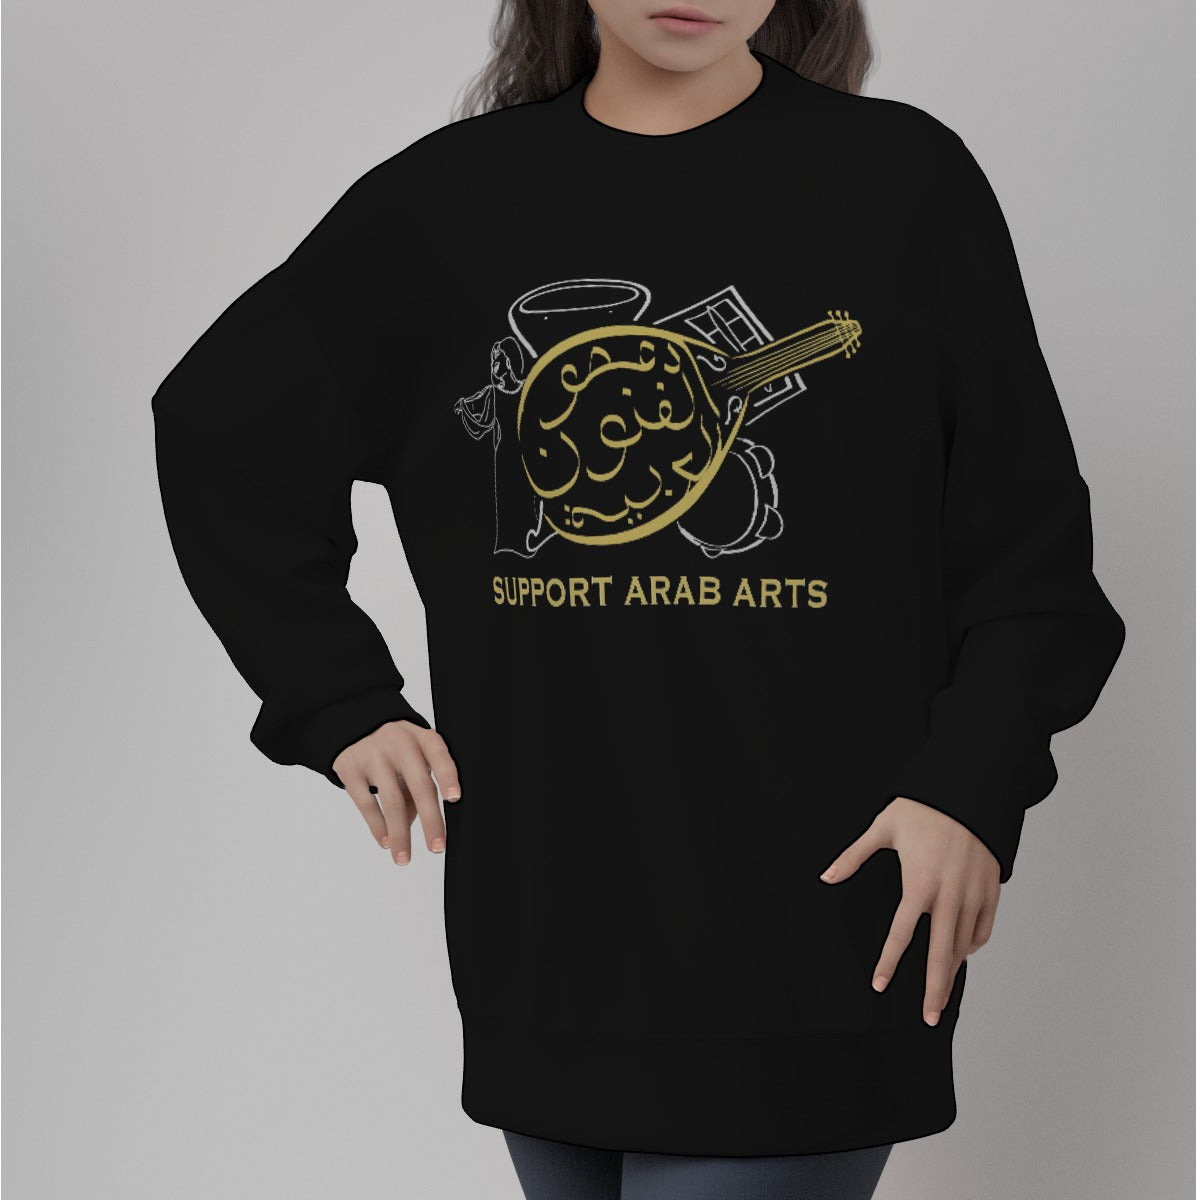 Support Arab Arts Casual Sweatshirt